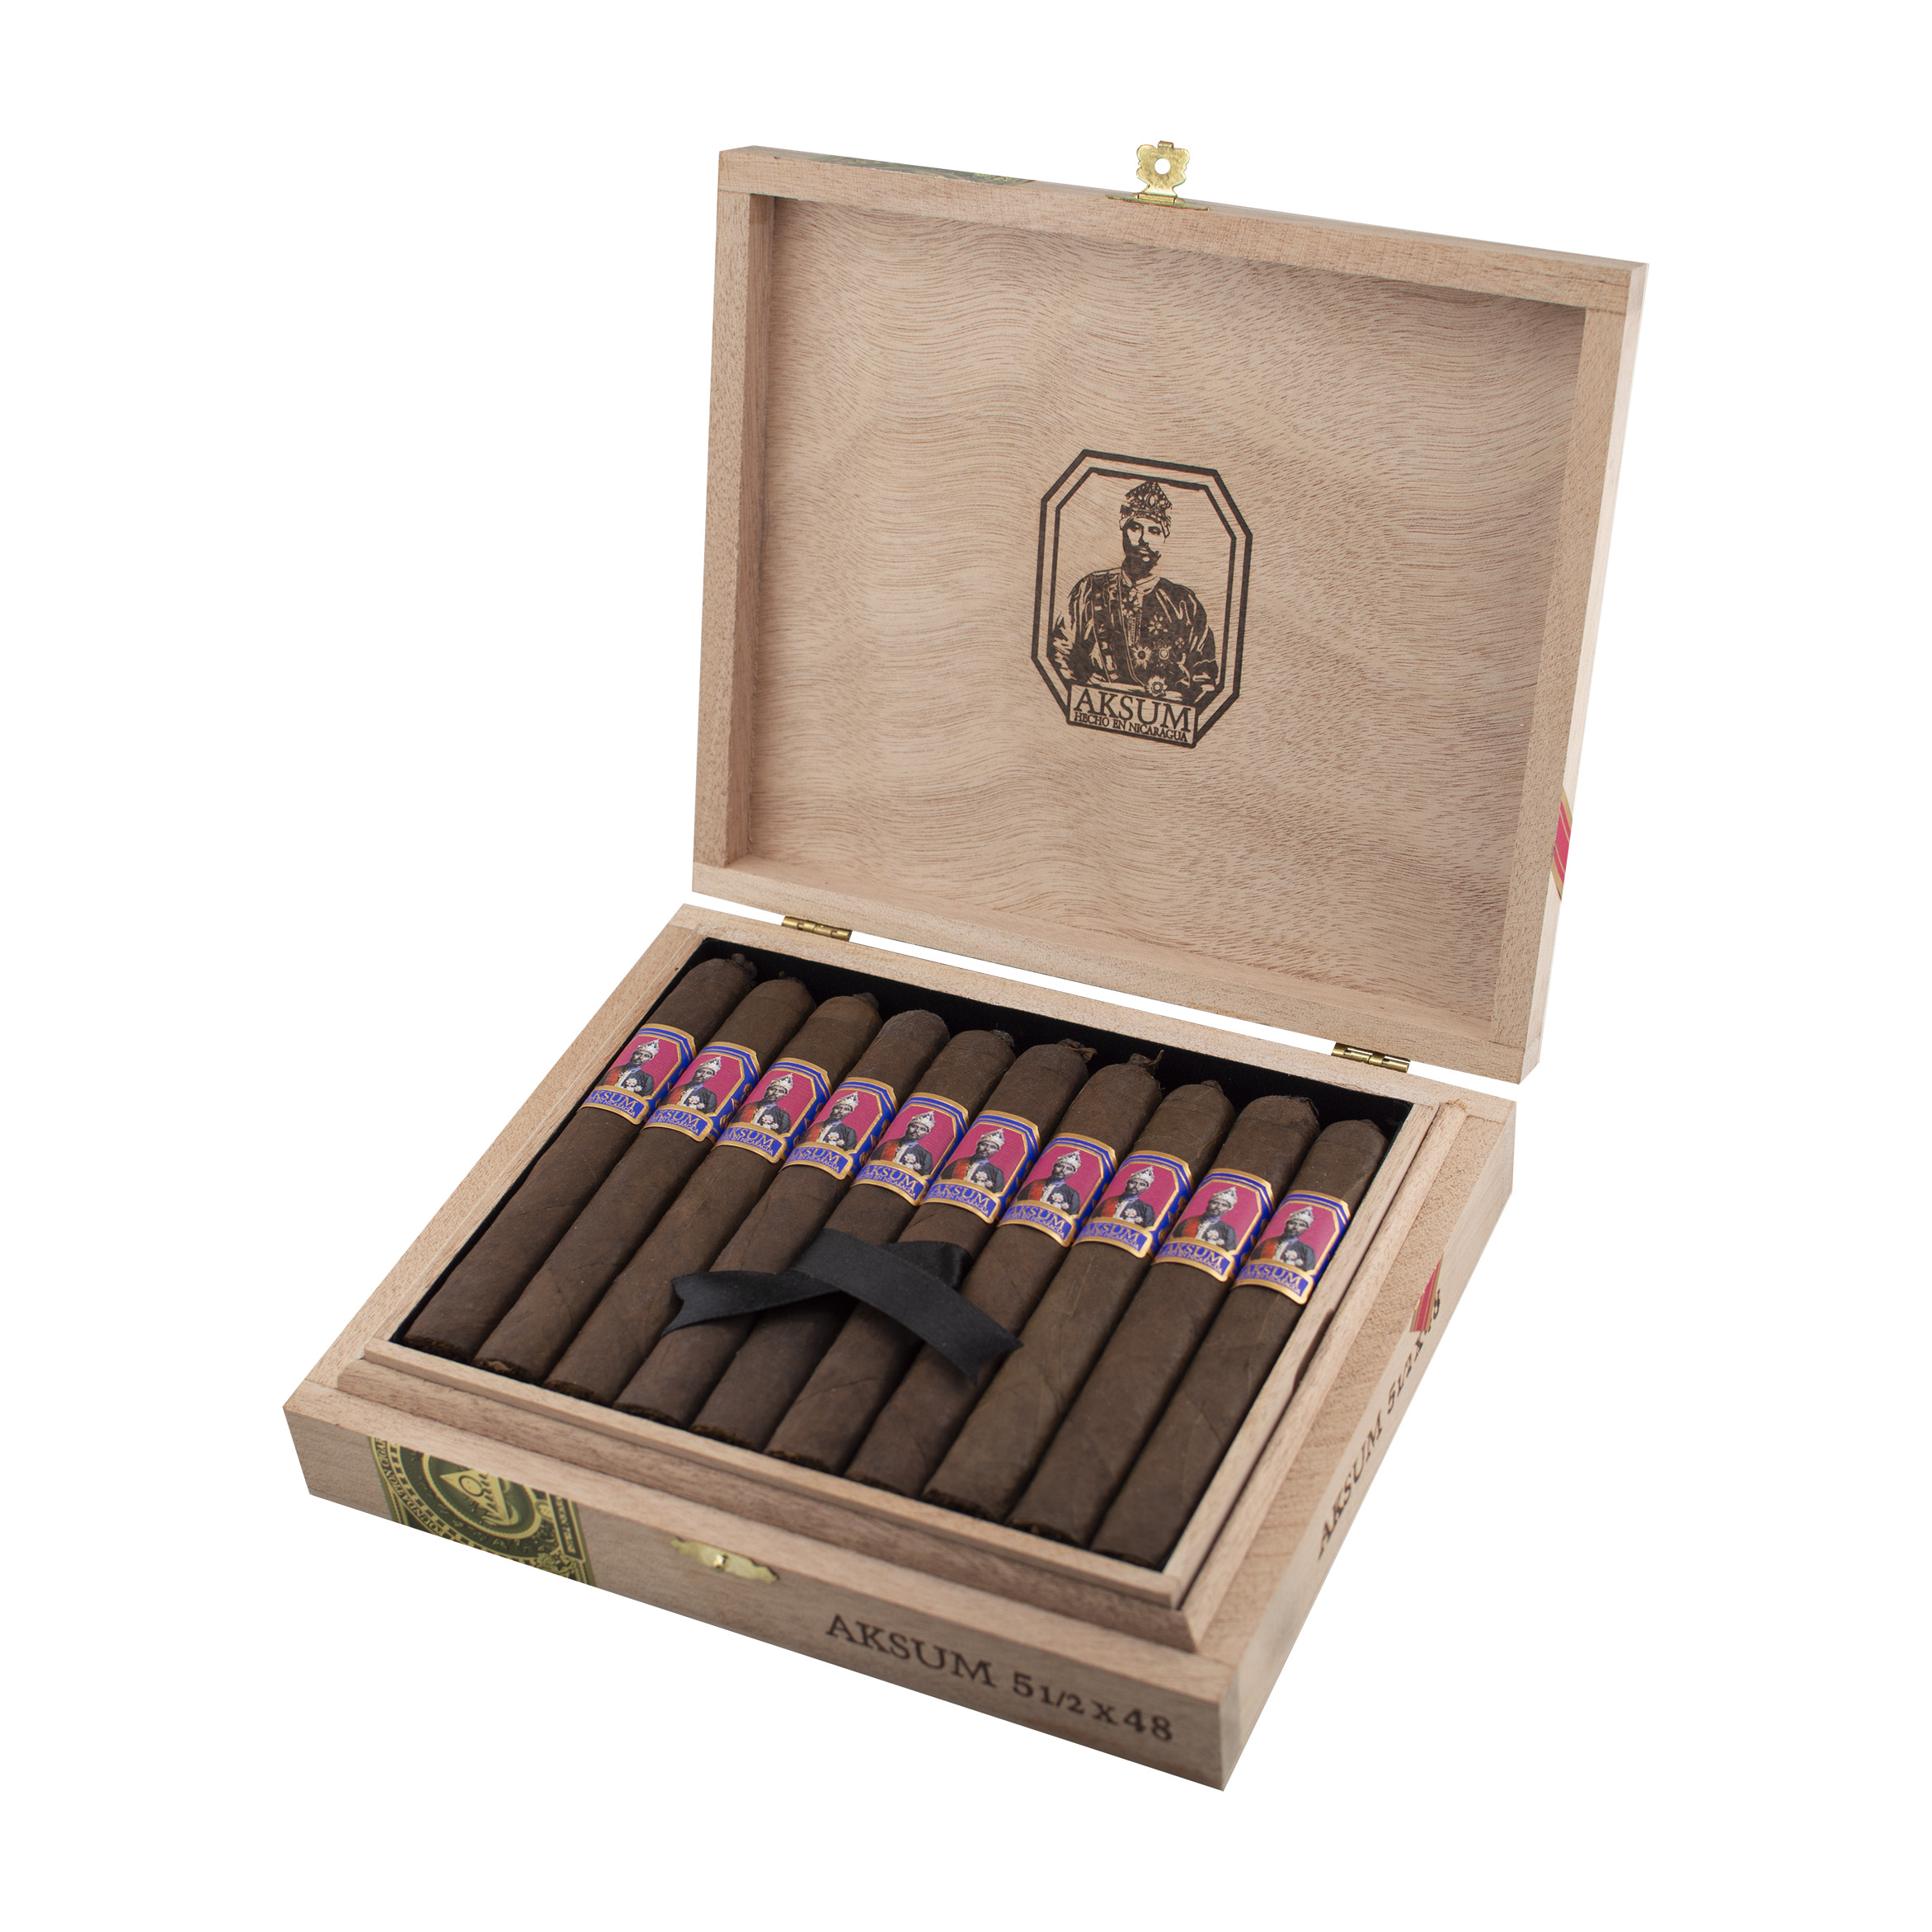 Foundation Aksum Maduro Corona Gorda Cigar - Box